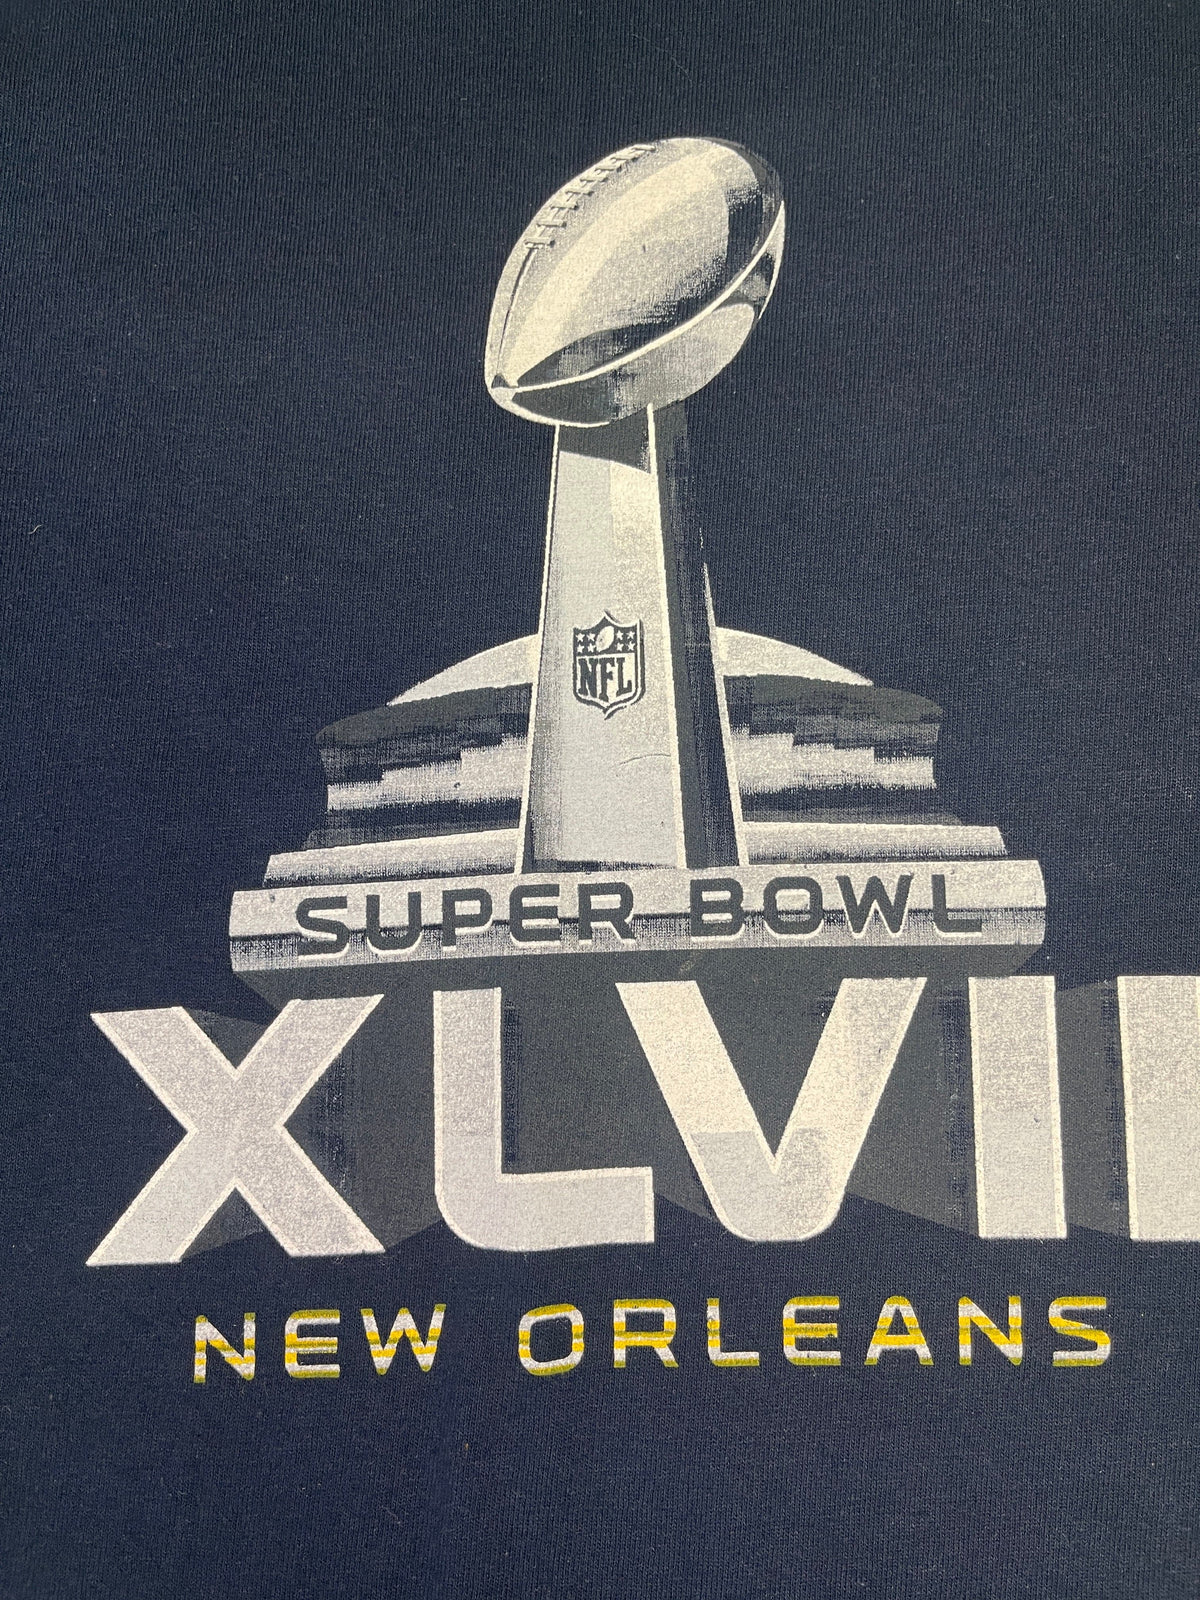 NFL Super Bowl XLVII New Orleans Black T-Shirt Youth X-Small 4 NWT